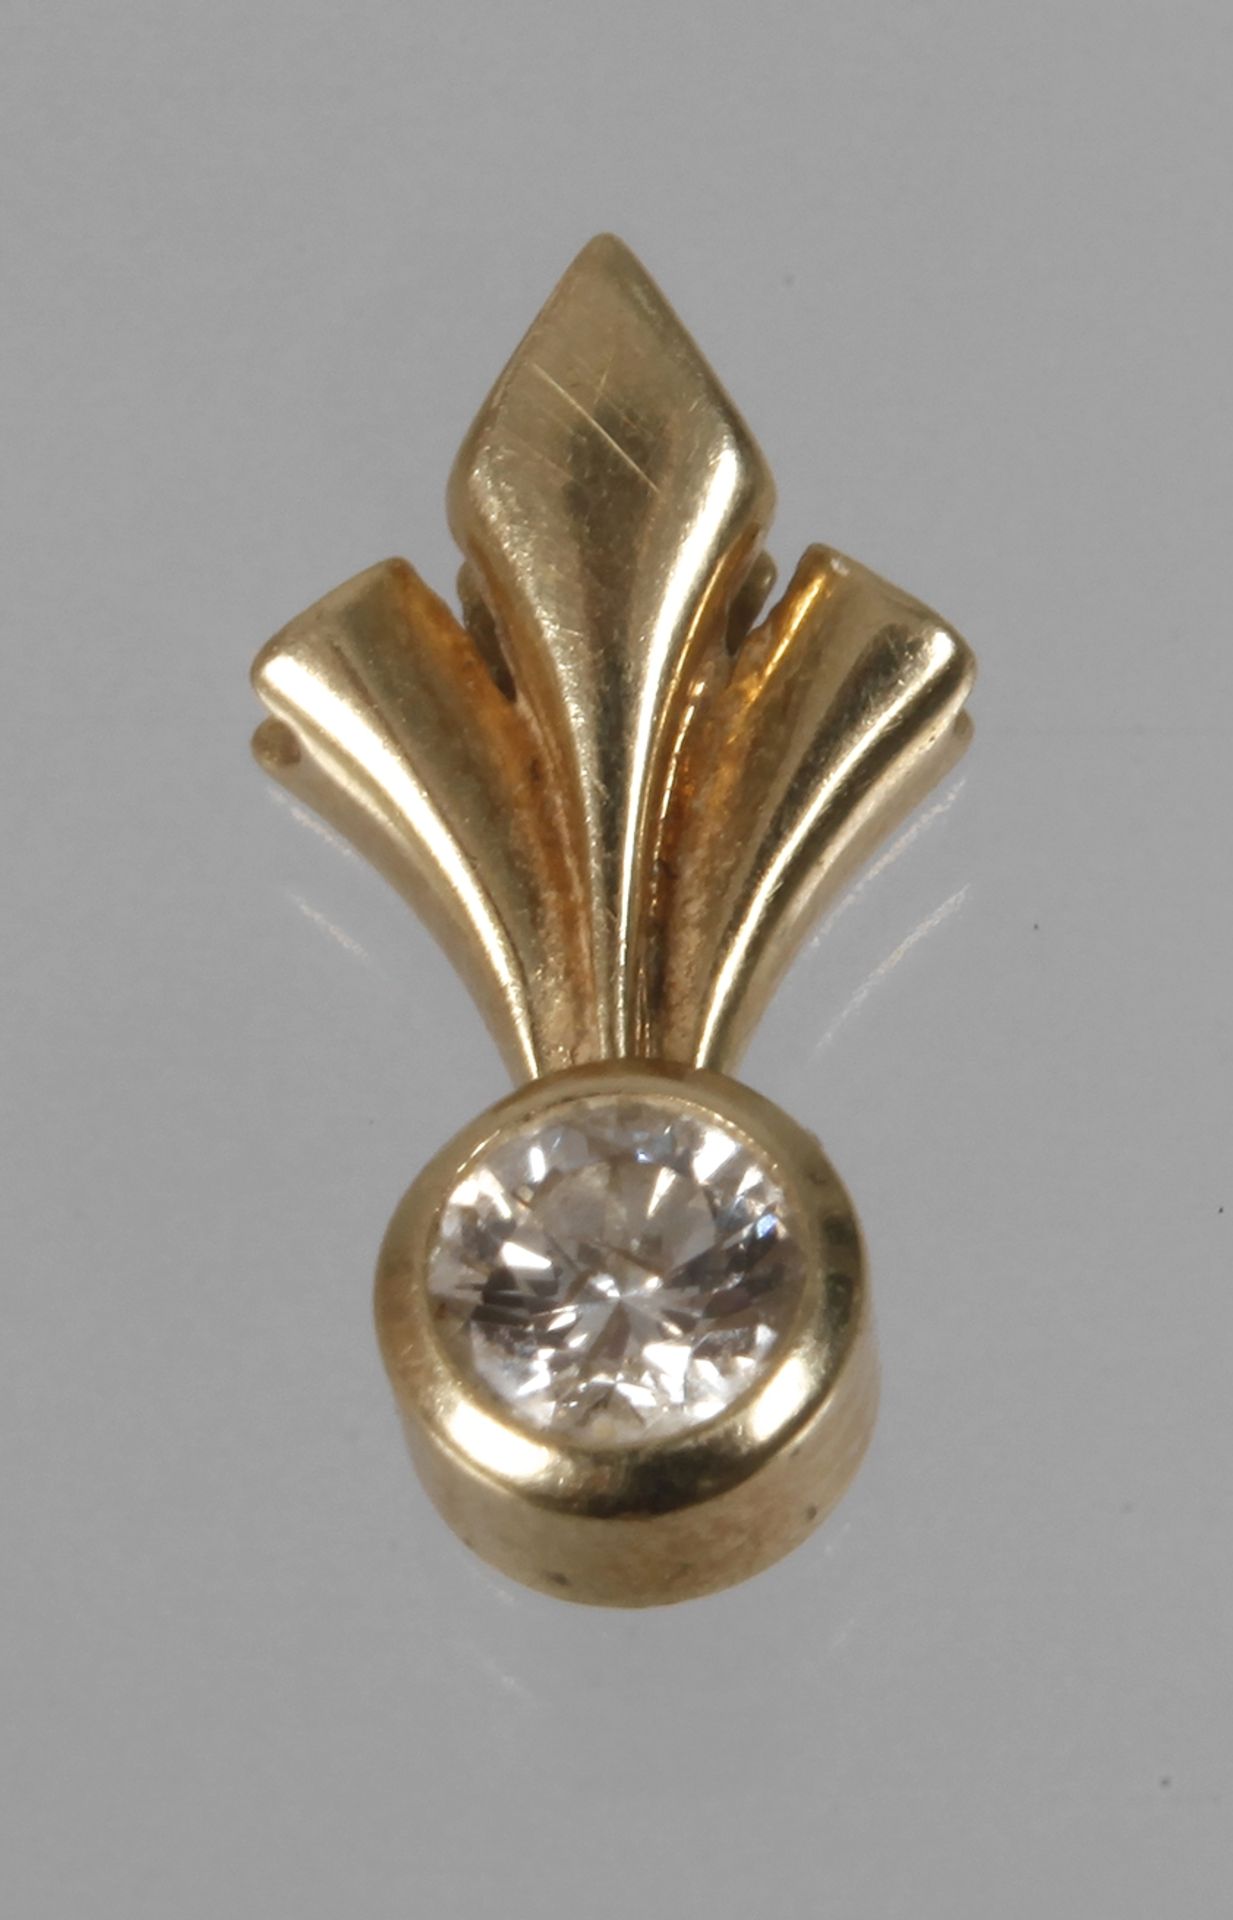 Diamond pendant